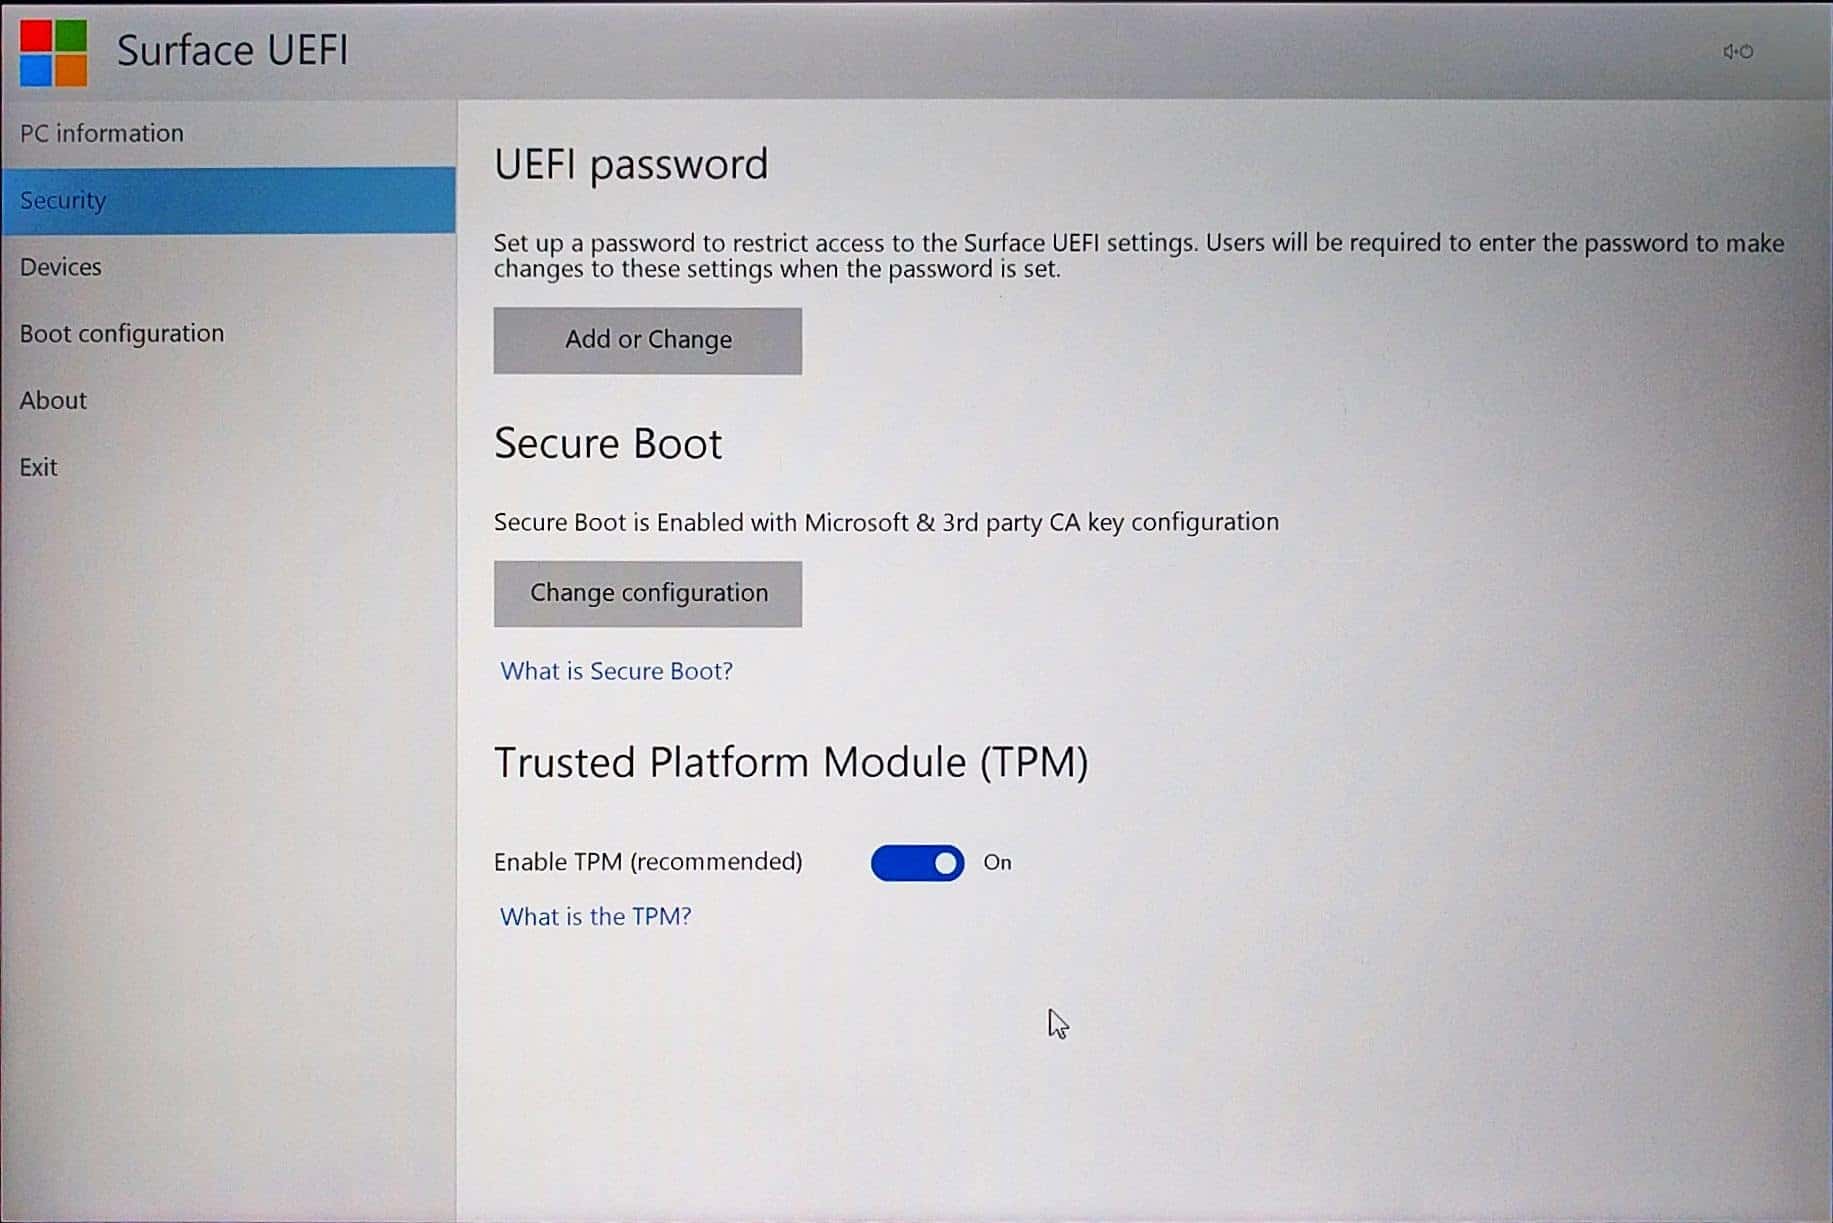 Surface Pro 4 - UEFI - Security